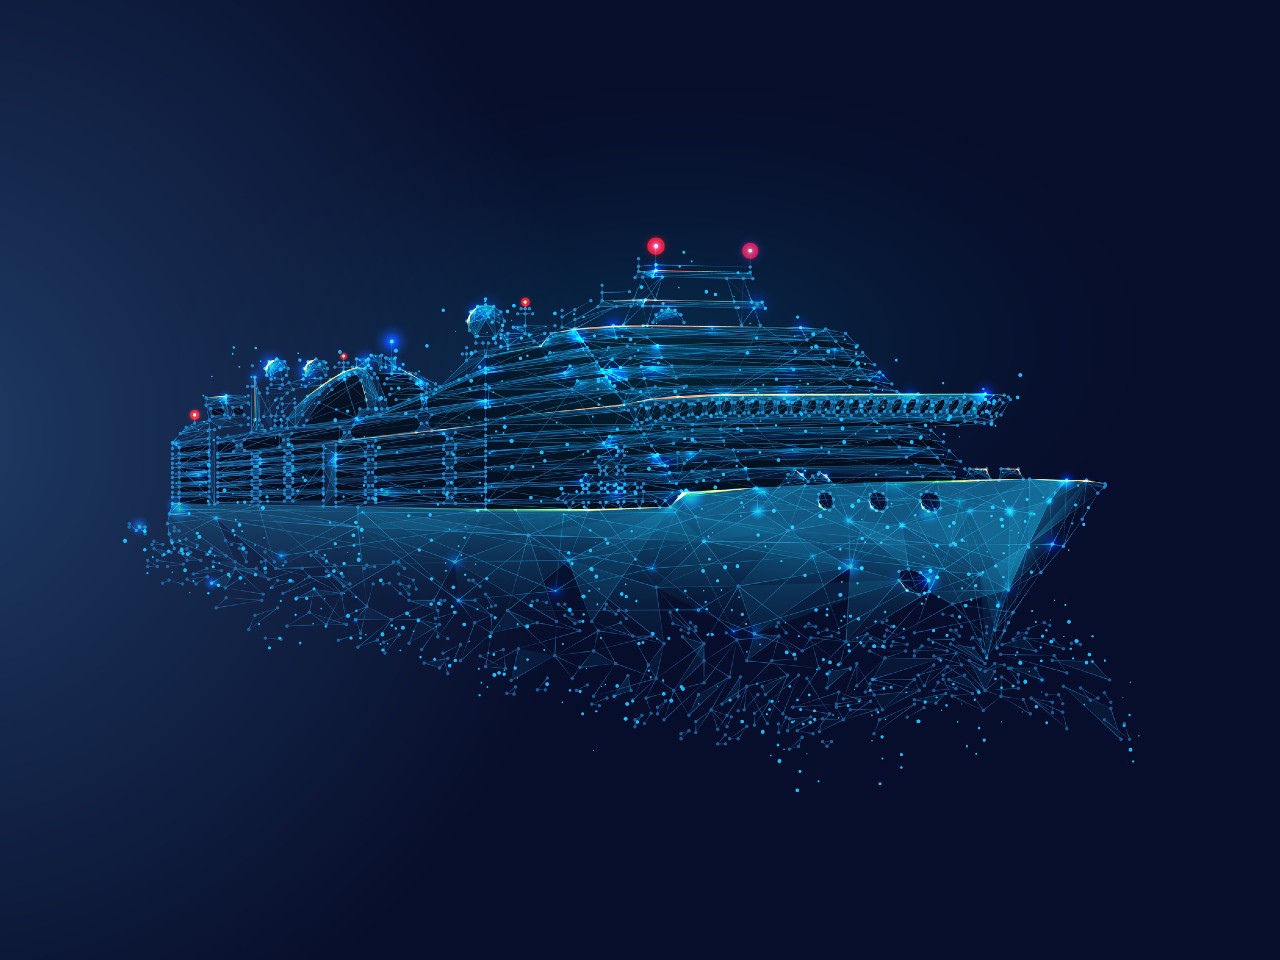 Cruise industry news Jul 2022: Tech innovation & more